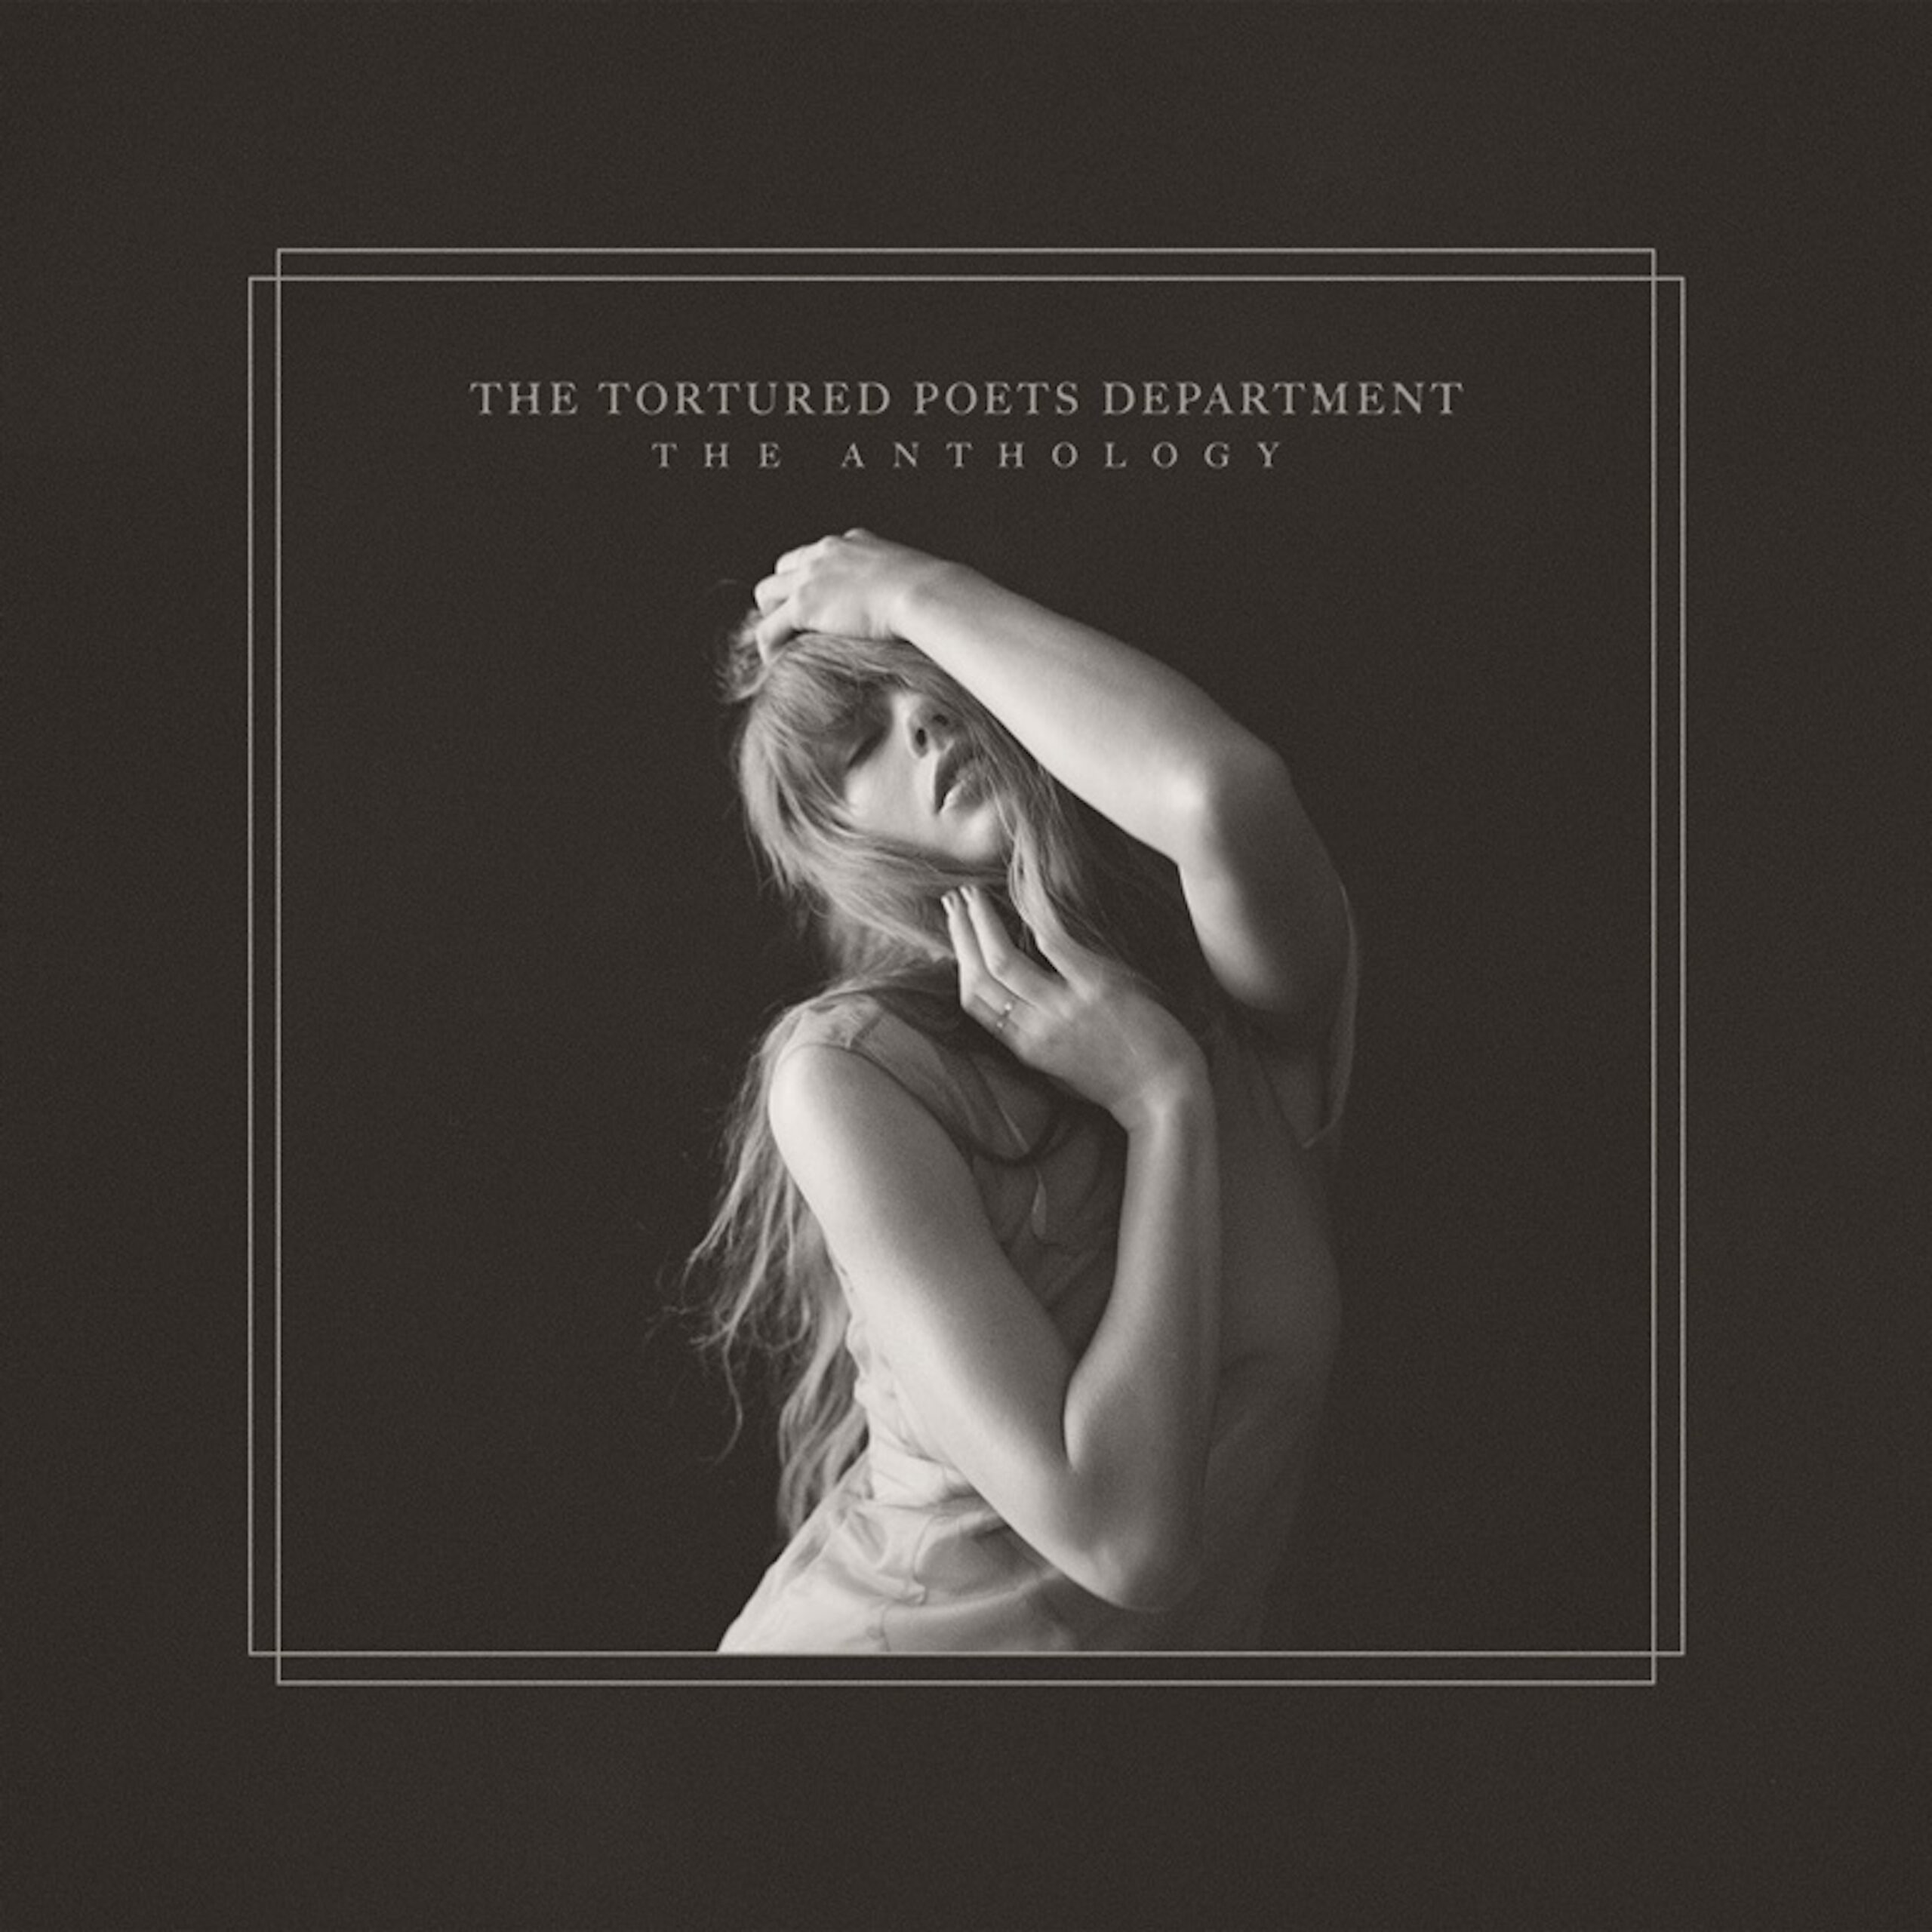 La popstar Taylor Swift: “The Tortured Poets Department”